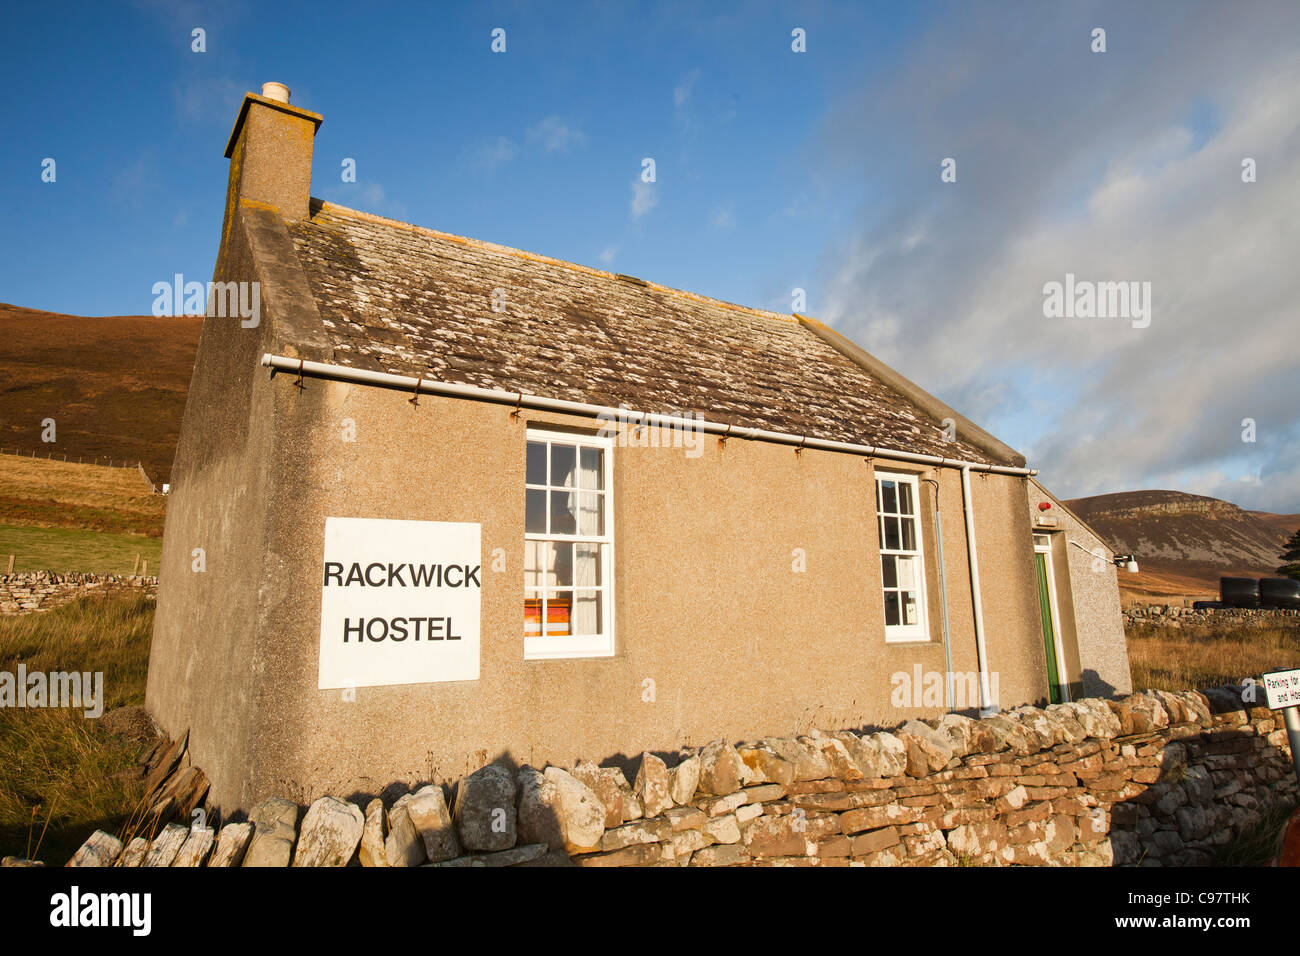 Rackwick Hostel on the isle of Hoy in the Orkney Isles, Scotland, UK. Stock Photo